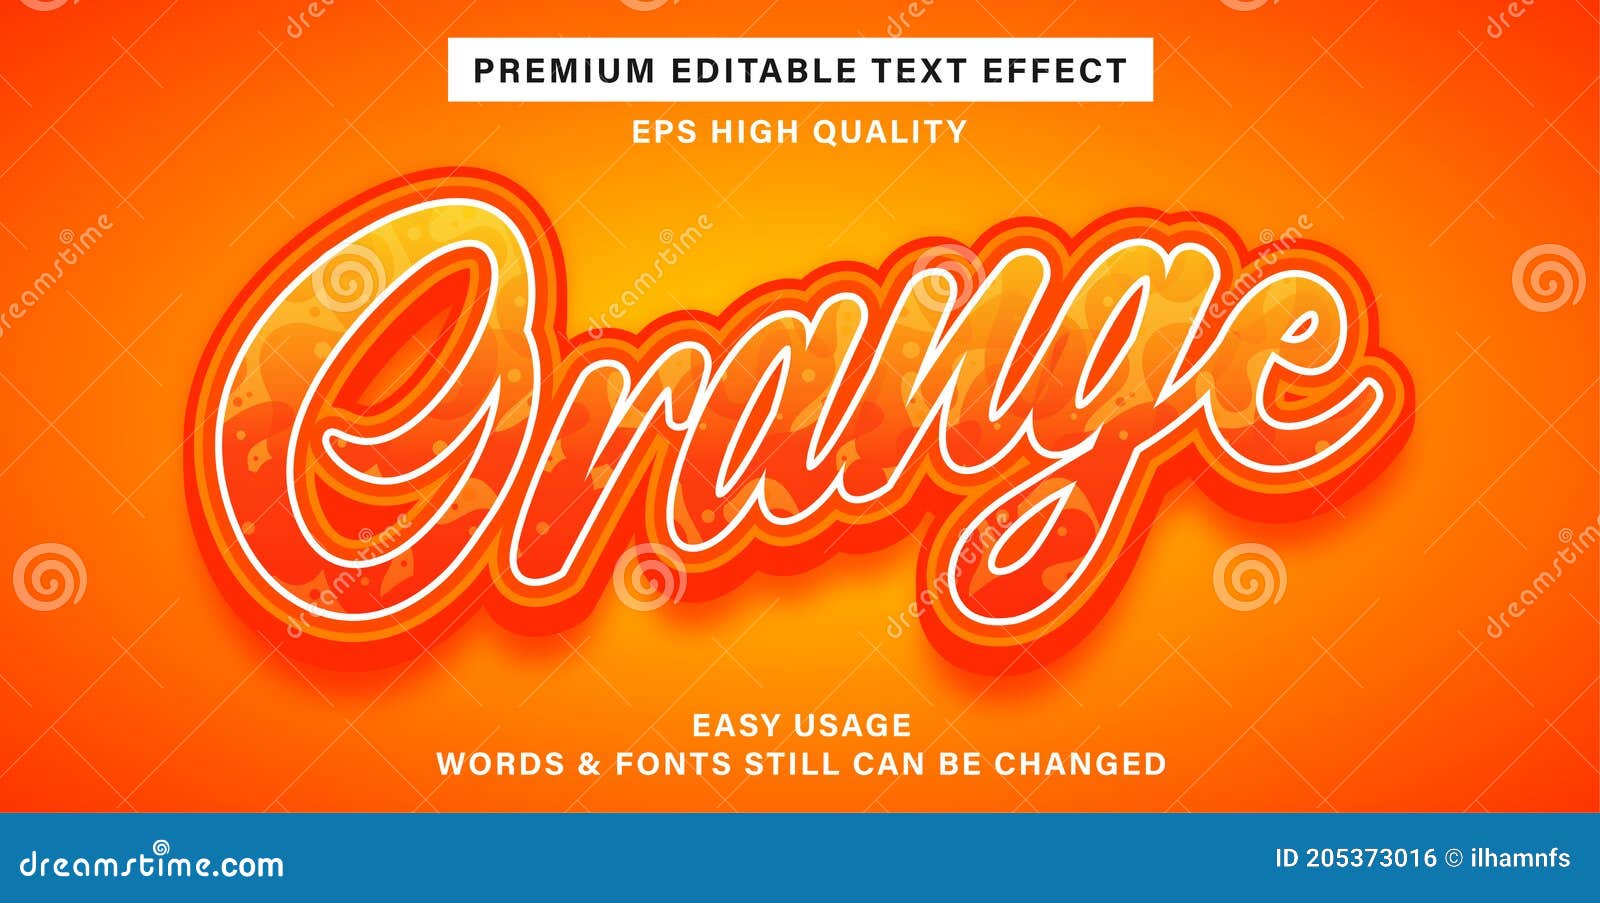 orange editable text effect style